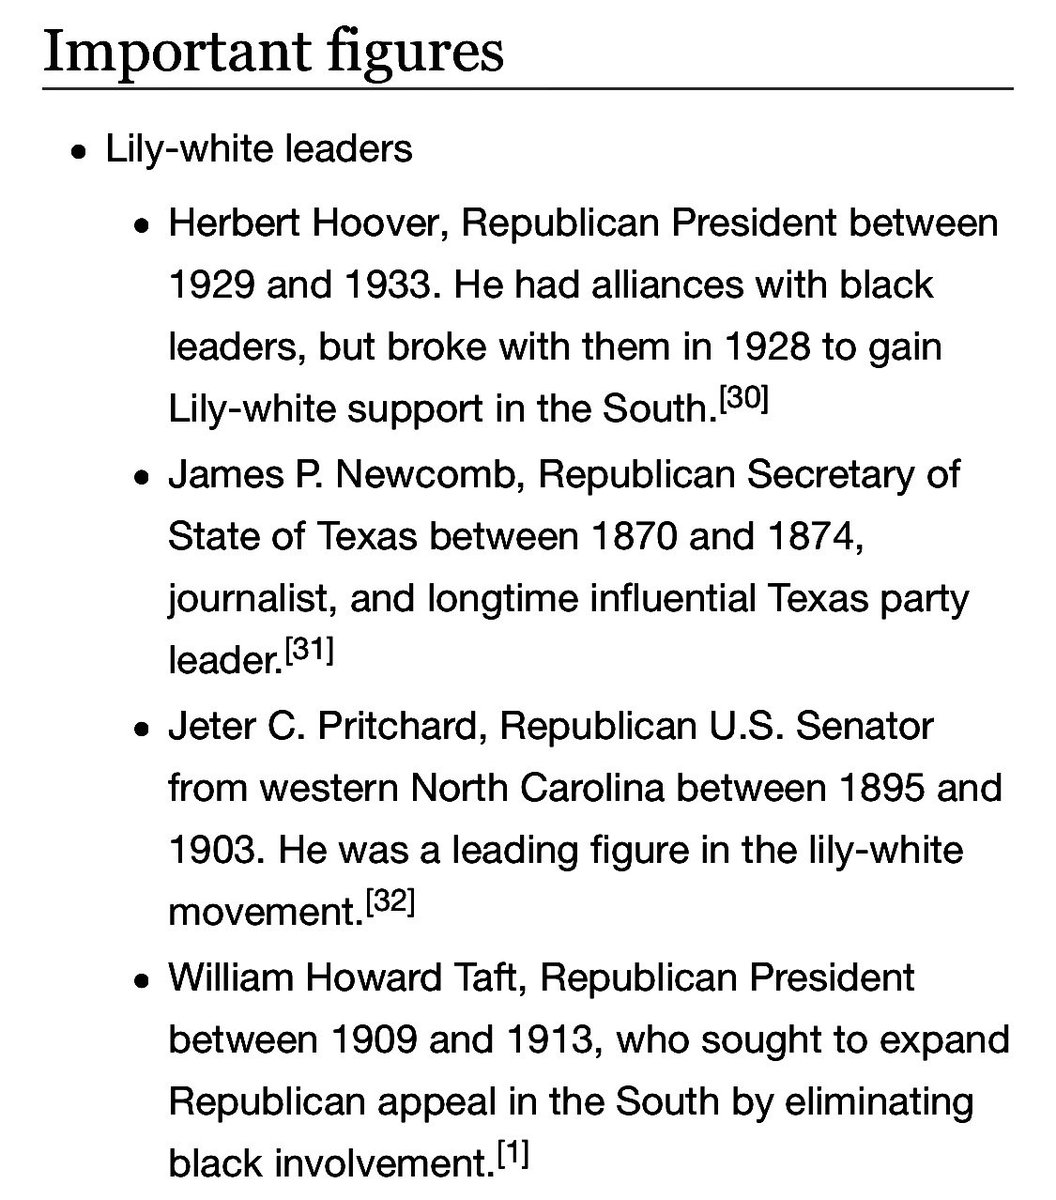  https://wikivisually.com/wiki/Lily-white_movement#cite_note-30